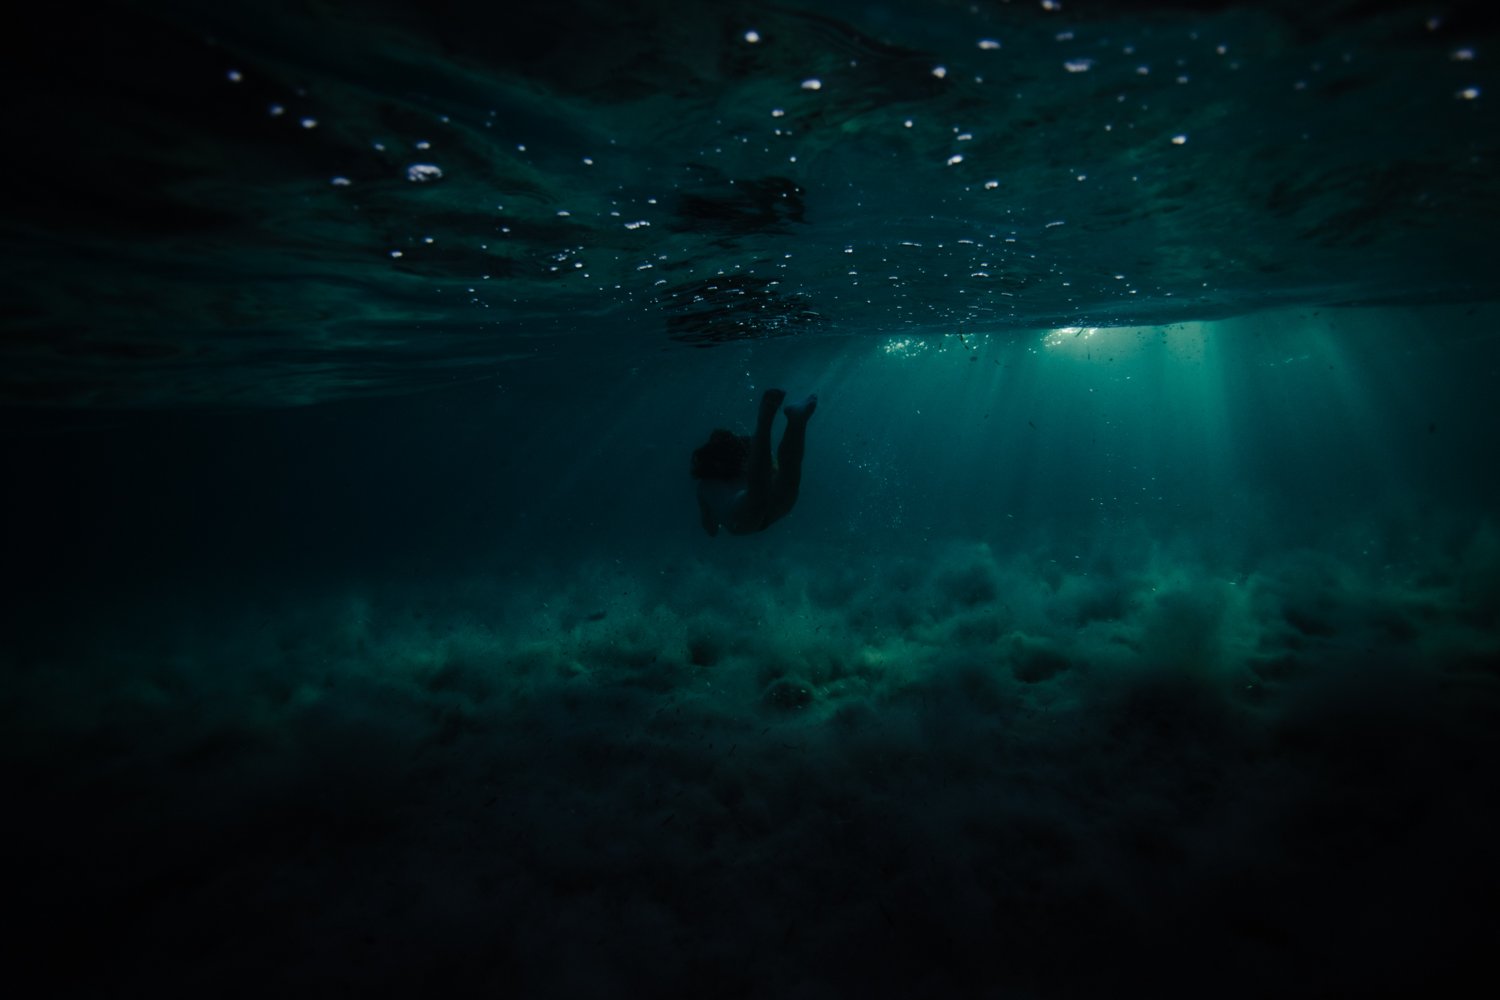 underwater corse corsica sea mediterranean island france french photographer photographe ajaccio Krista Espino Capo di feno wave nude nue femme woman fine art photography-19.jpg